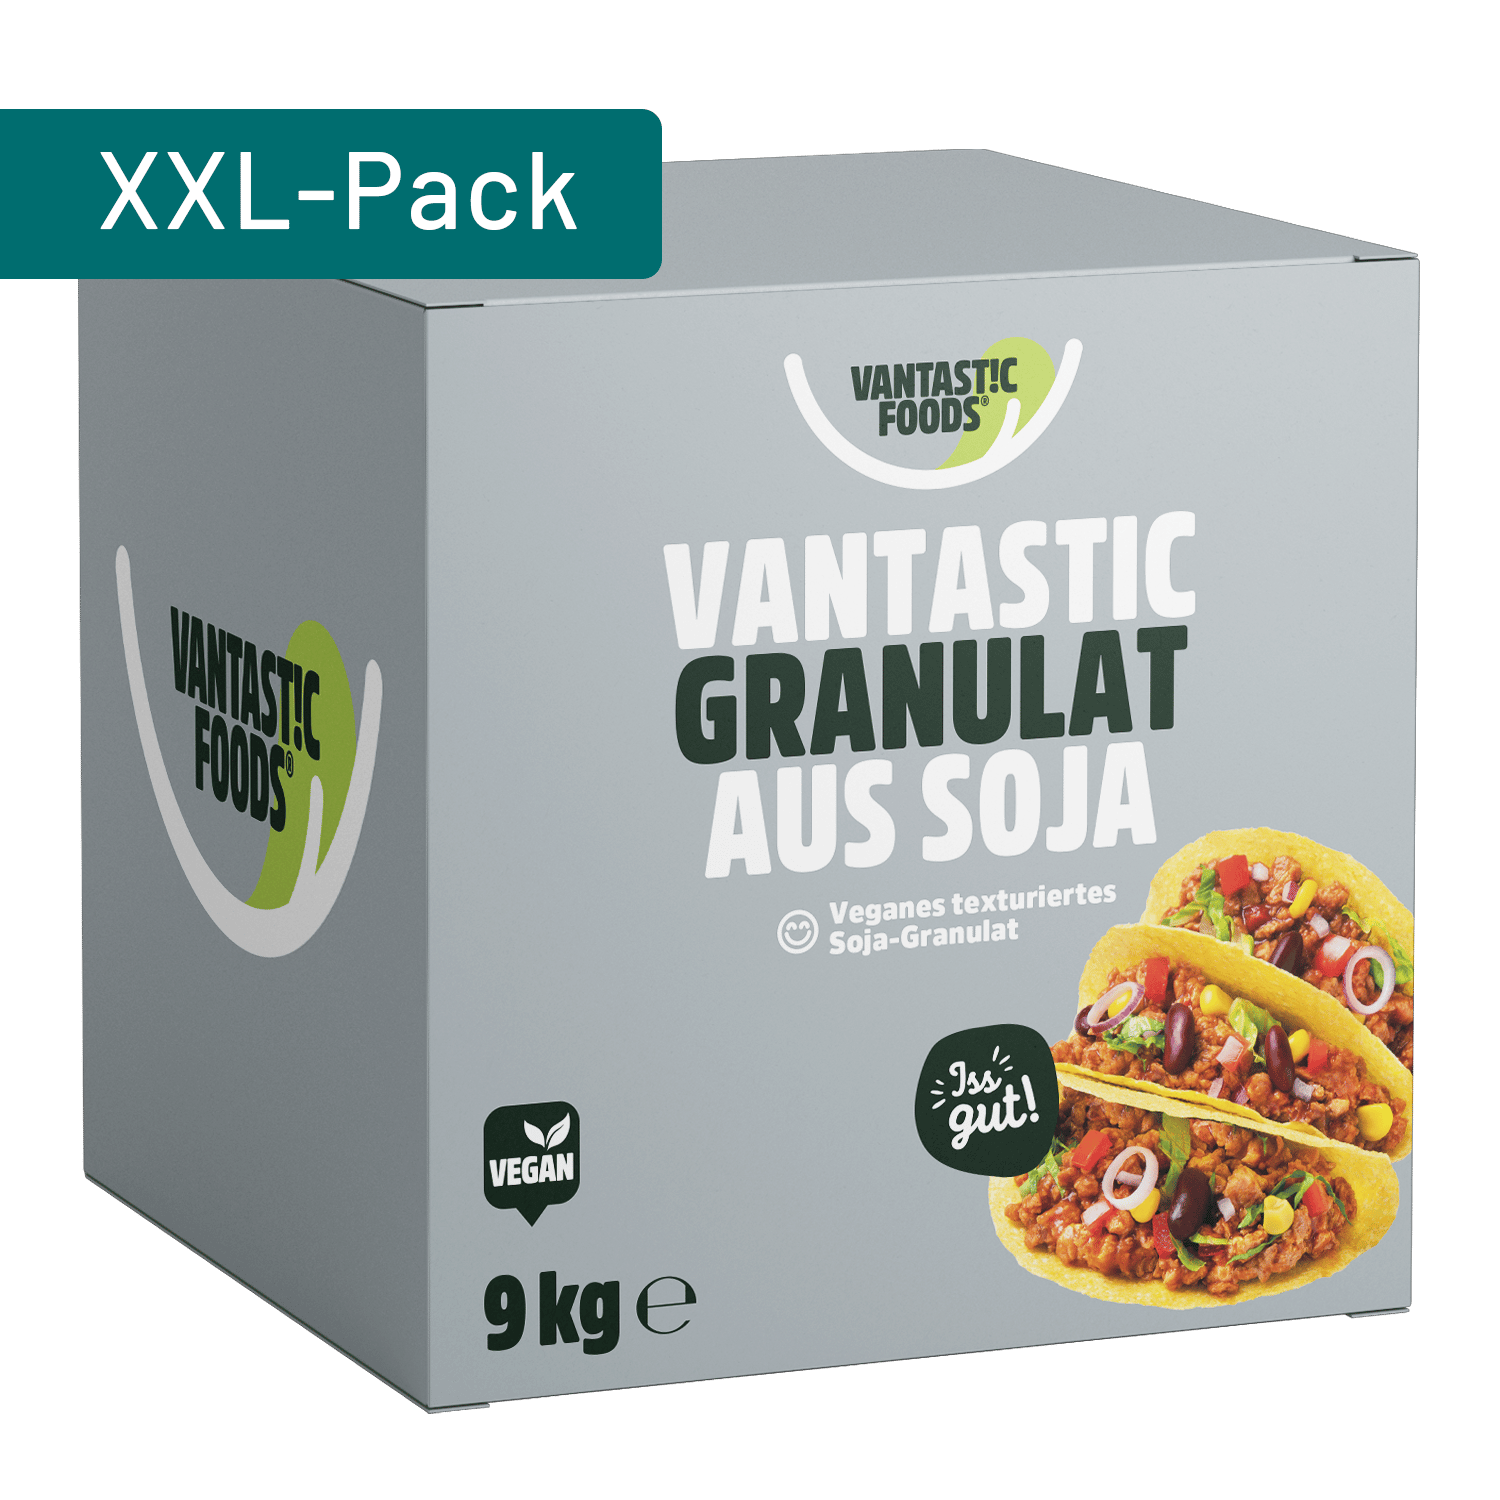 Vantastic Granulat aus Soja, 9kg